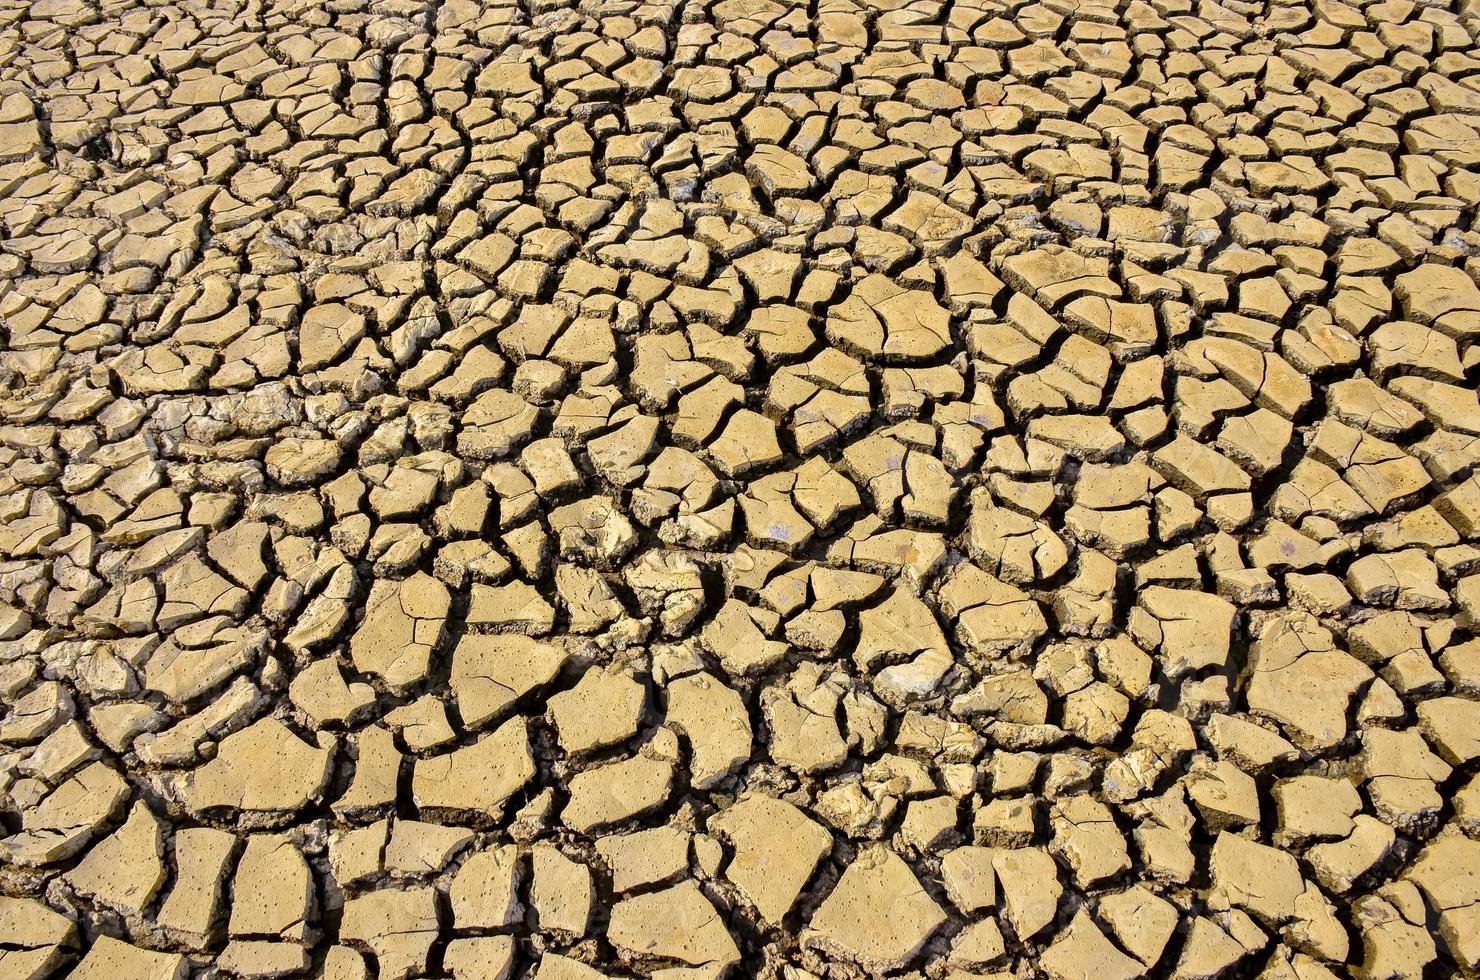 soil drought cracks texture background for design. photo